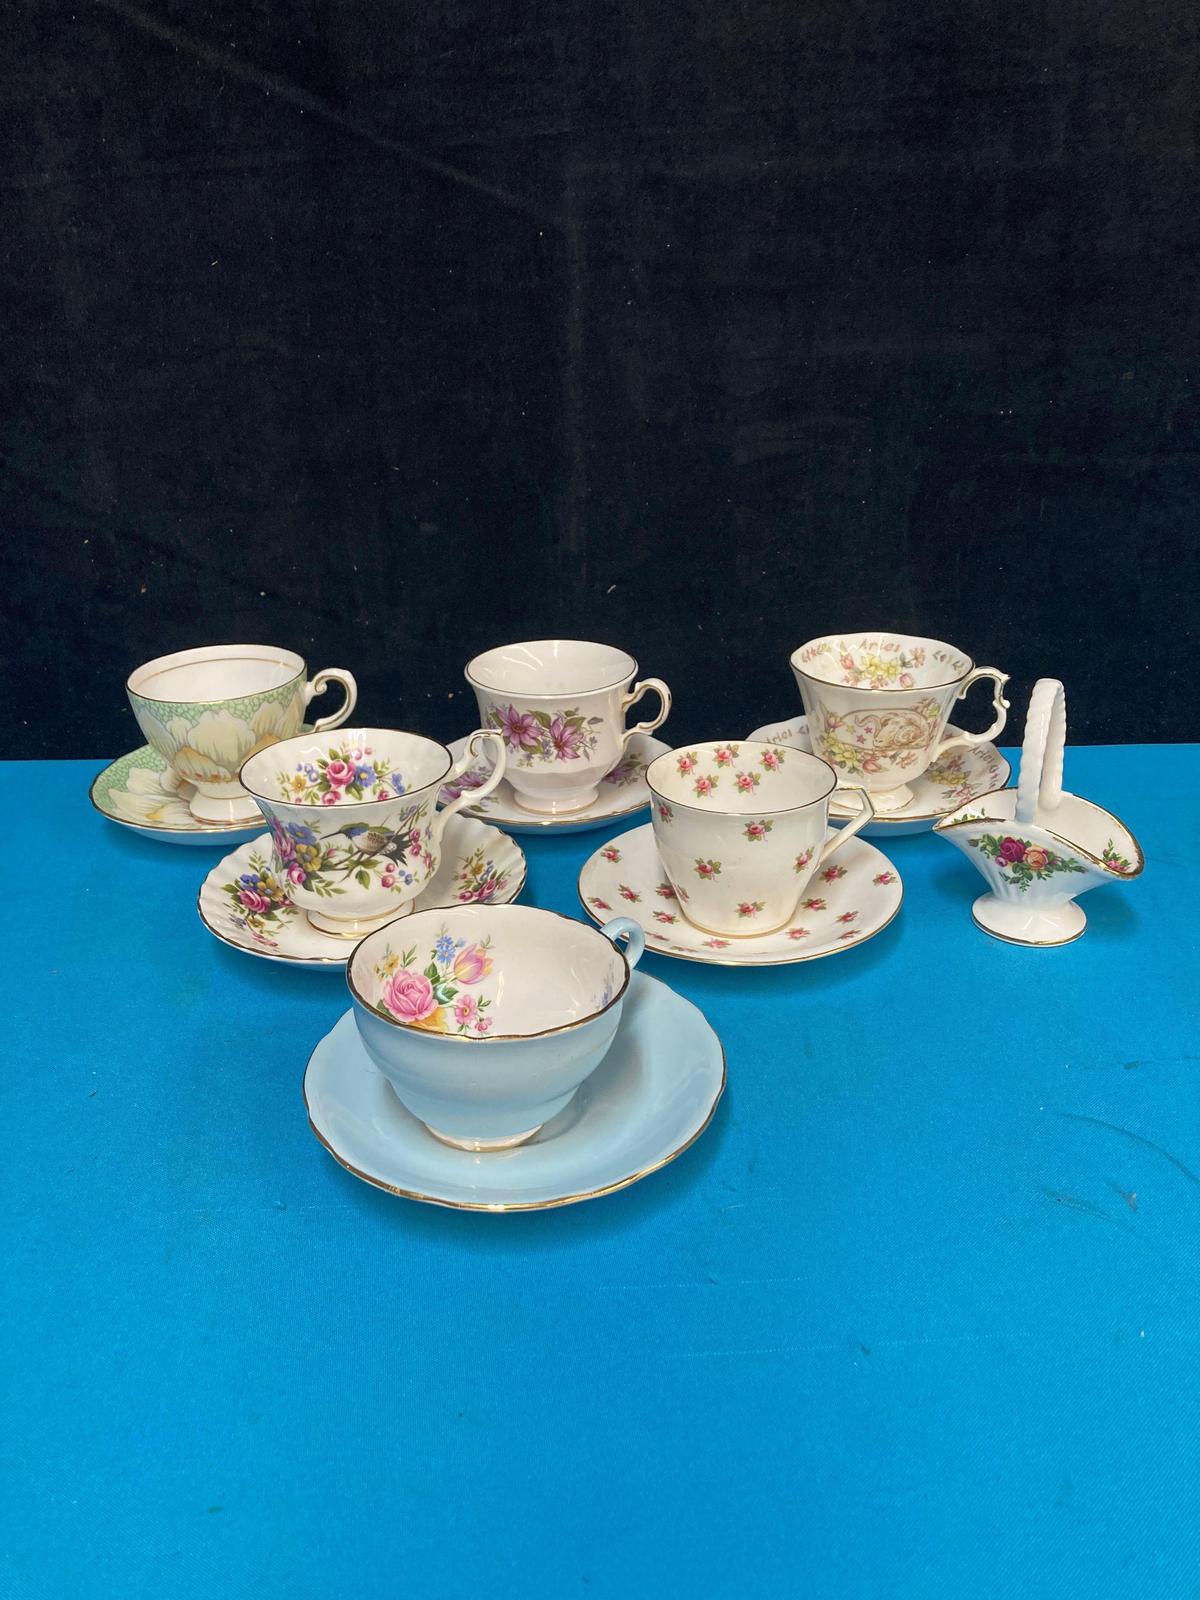 Six bone China tea cups and saucers